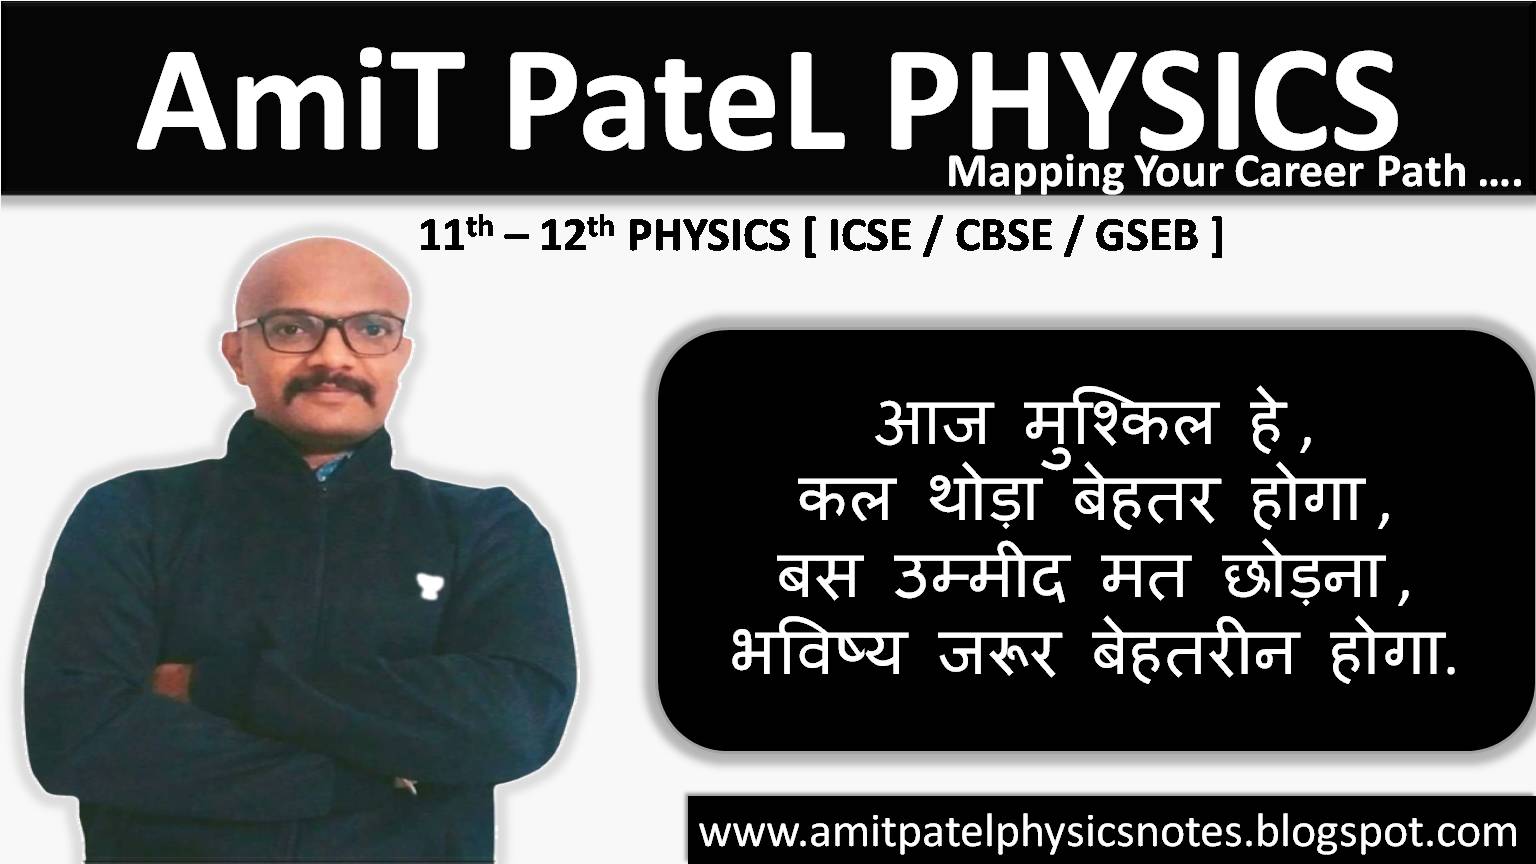 AmiT PateL PHYSICS